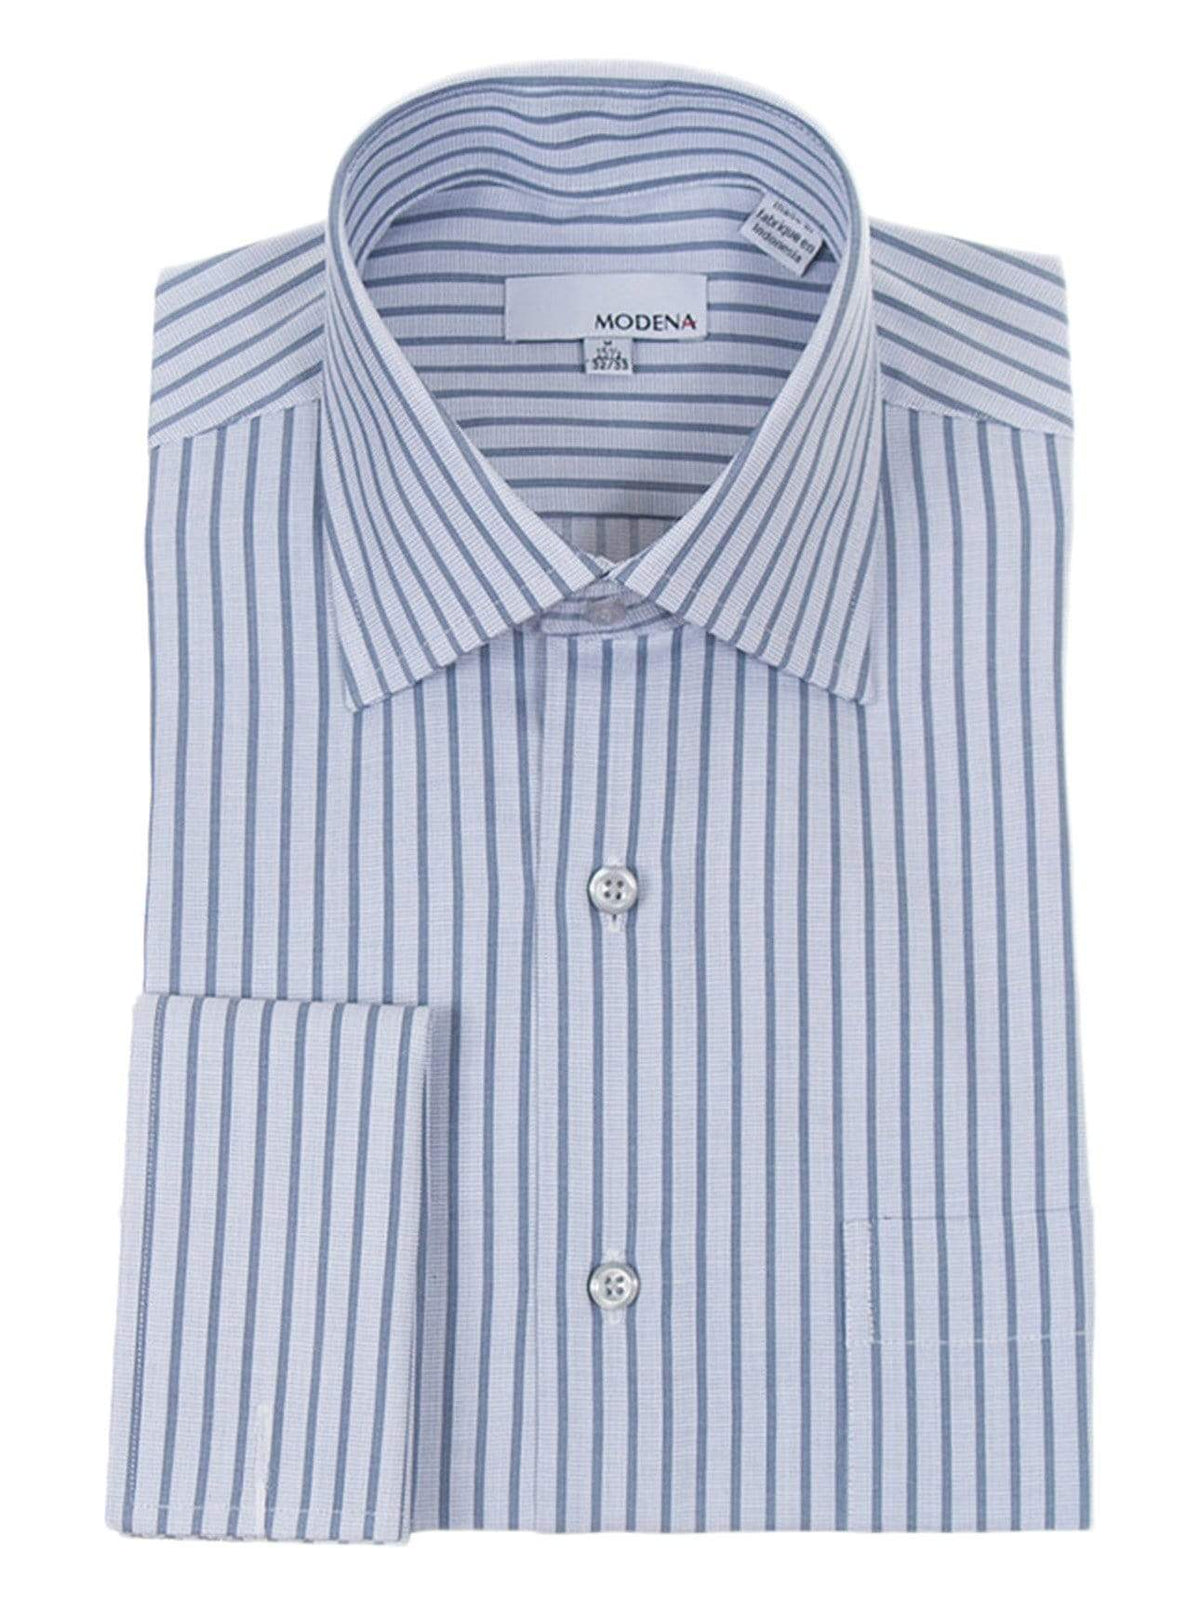 Modena SHIRTS 15 1/2 34/35 Mens Gray Textured Striped Spread Collar French Cuff Cotton Blend Dress Shirt